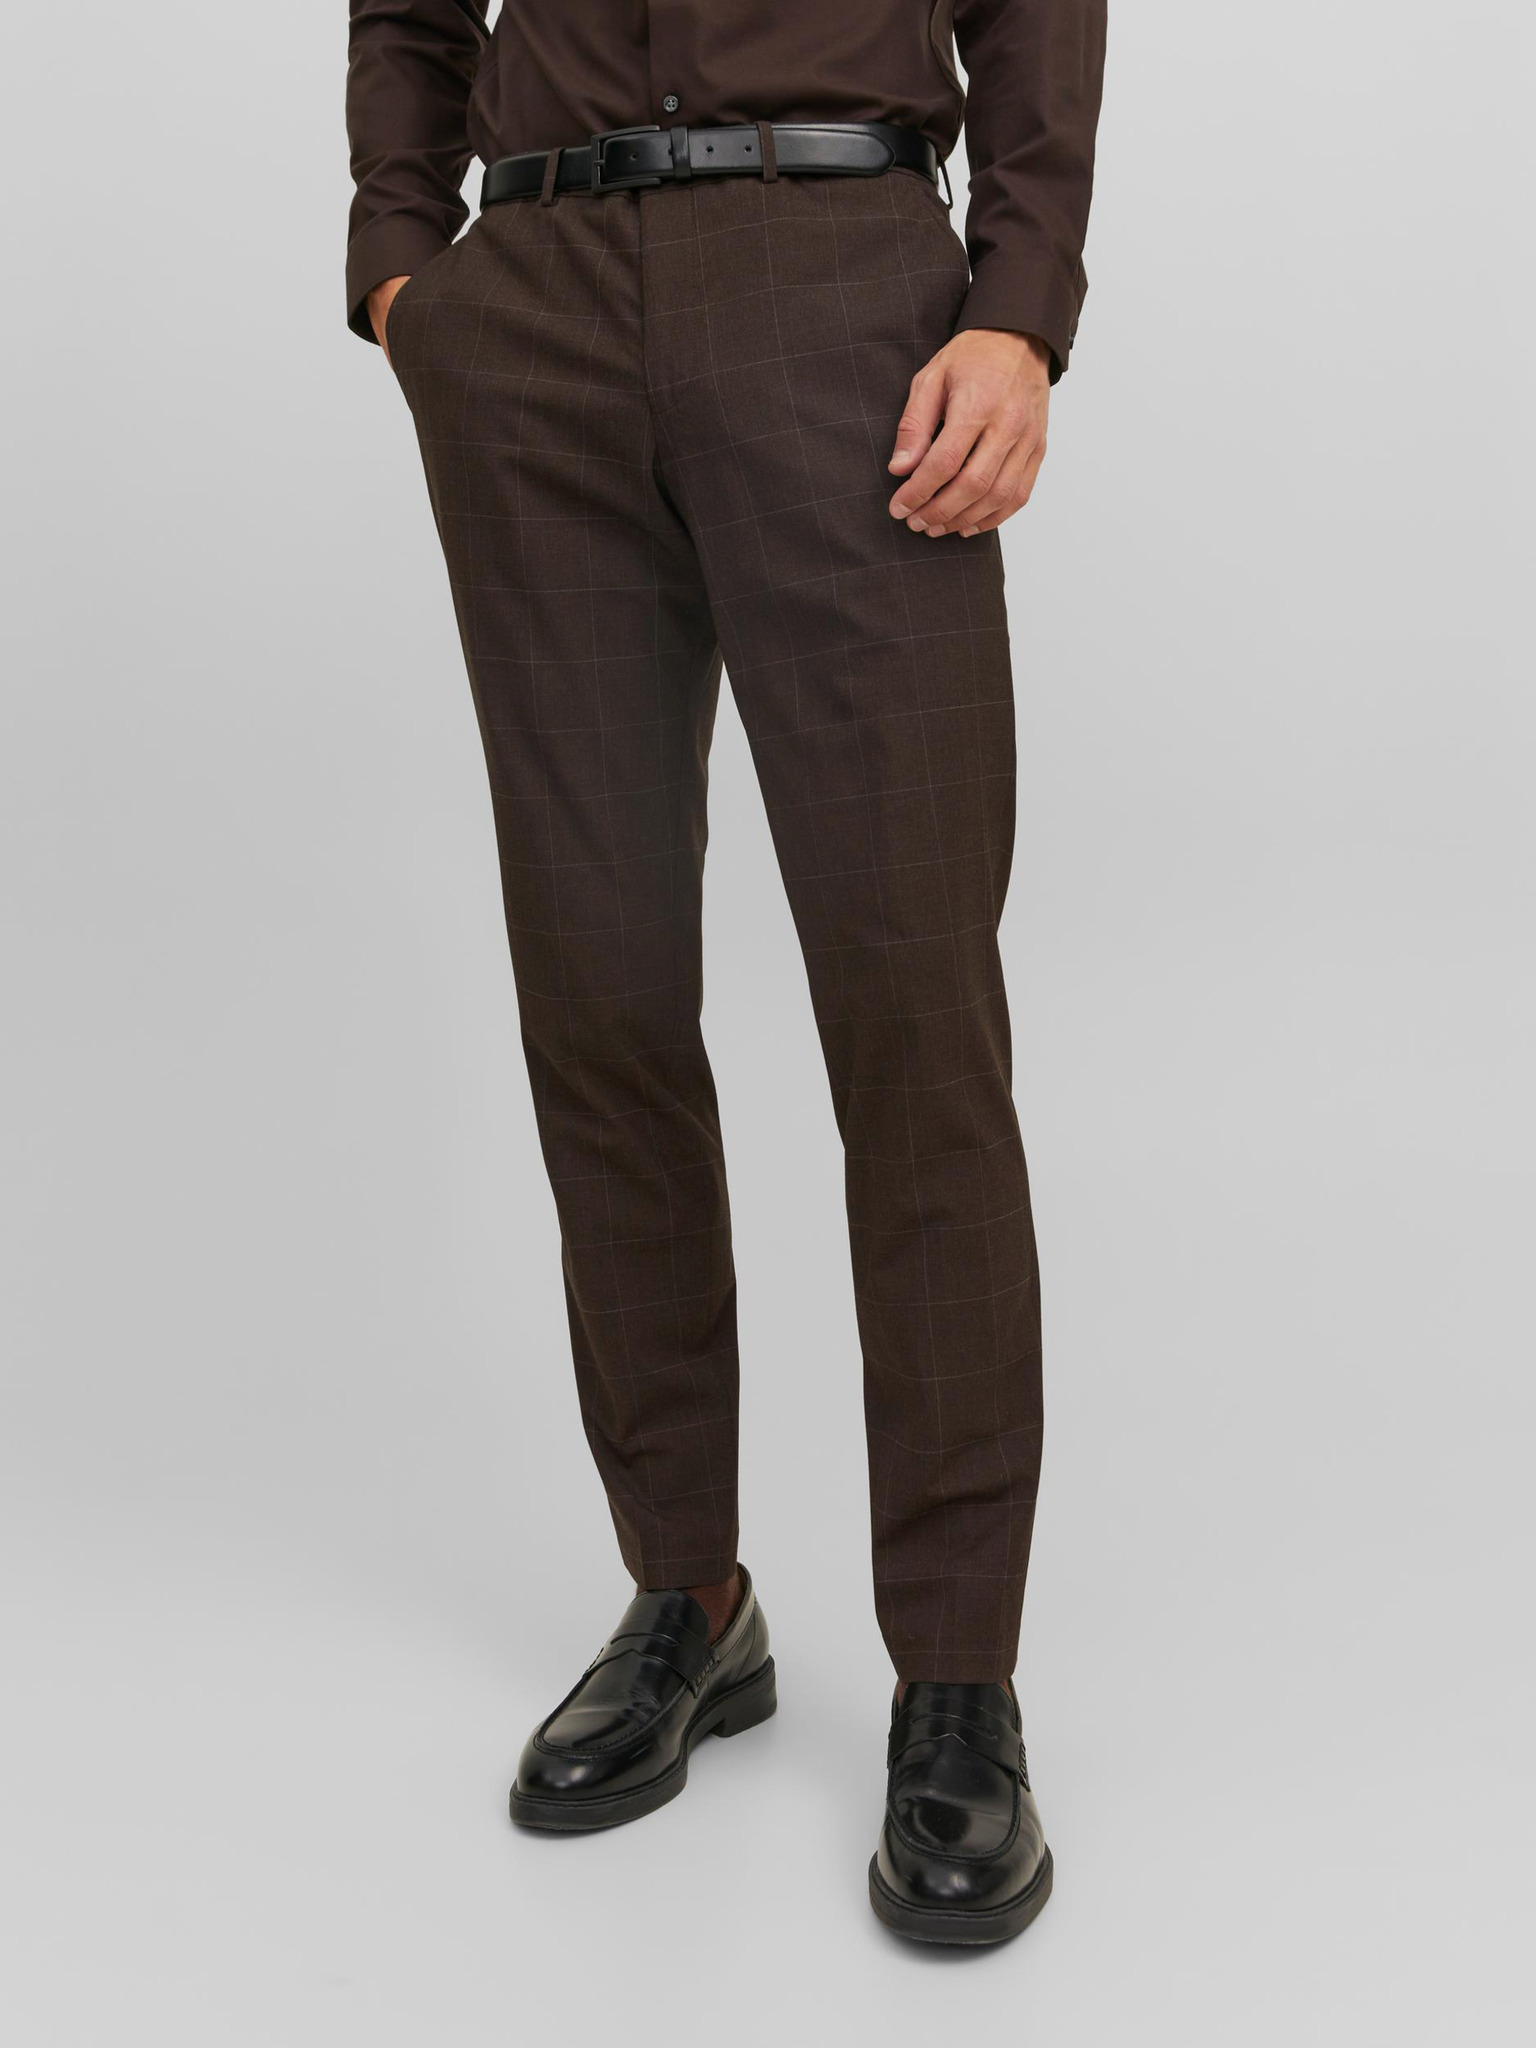 Buy Peter England Men Olive Solid Slim Fit Formal Trousers online